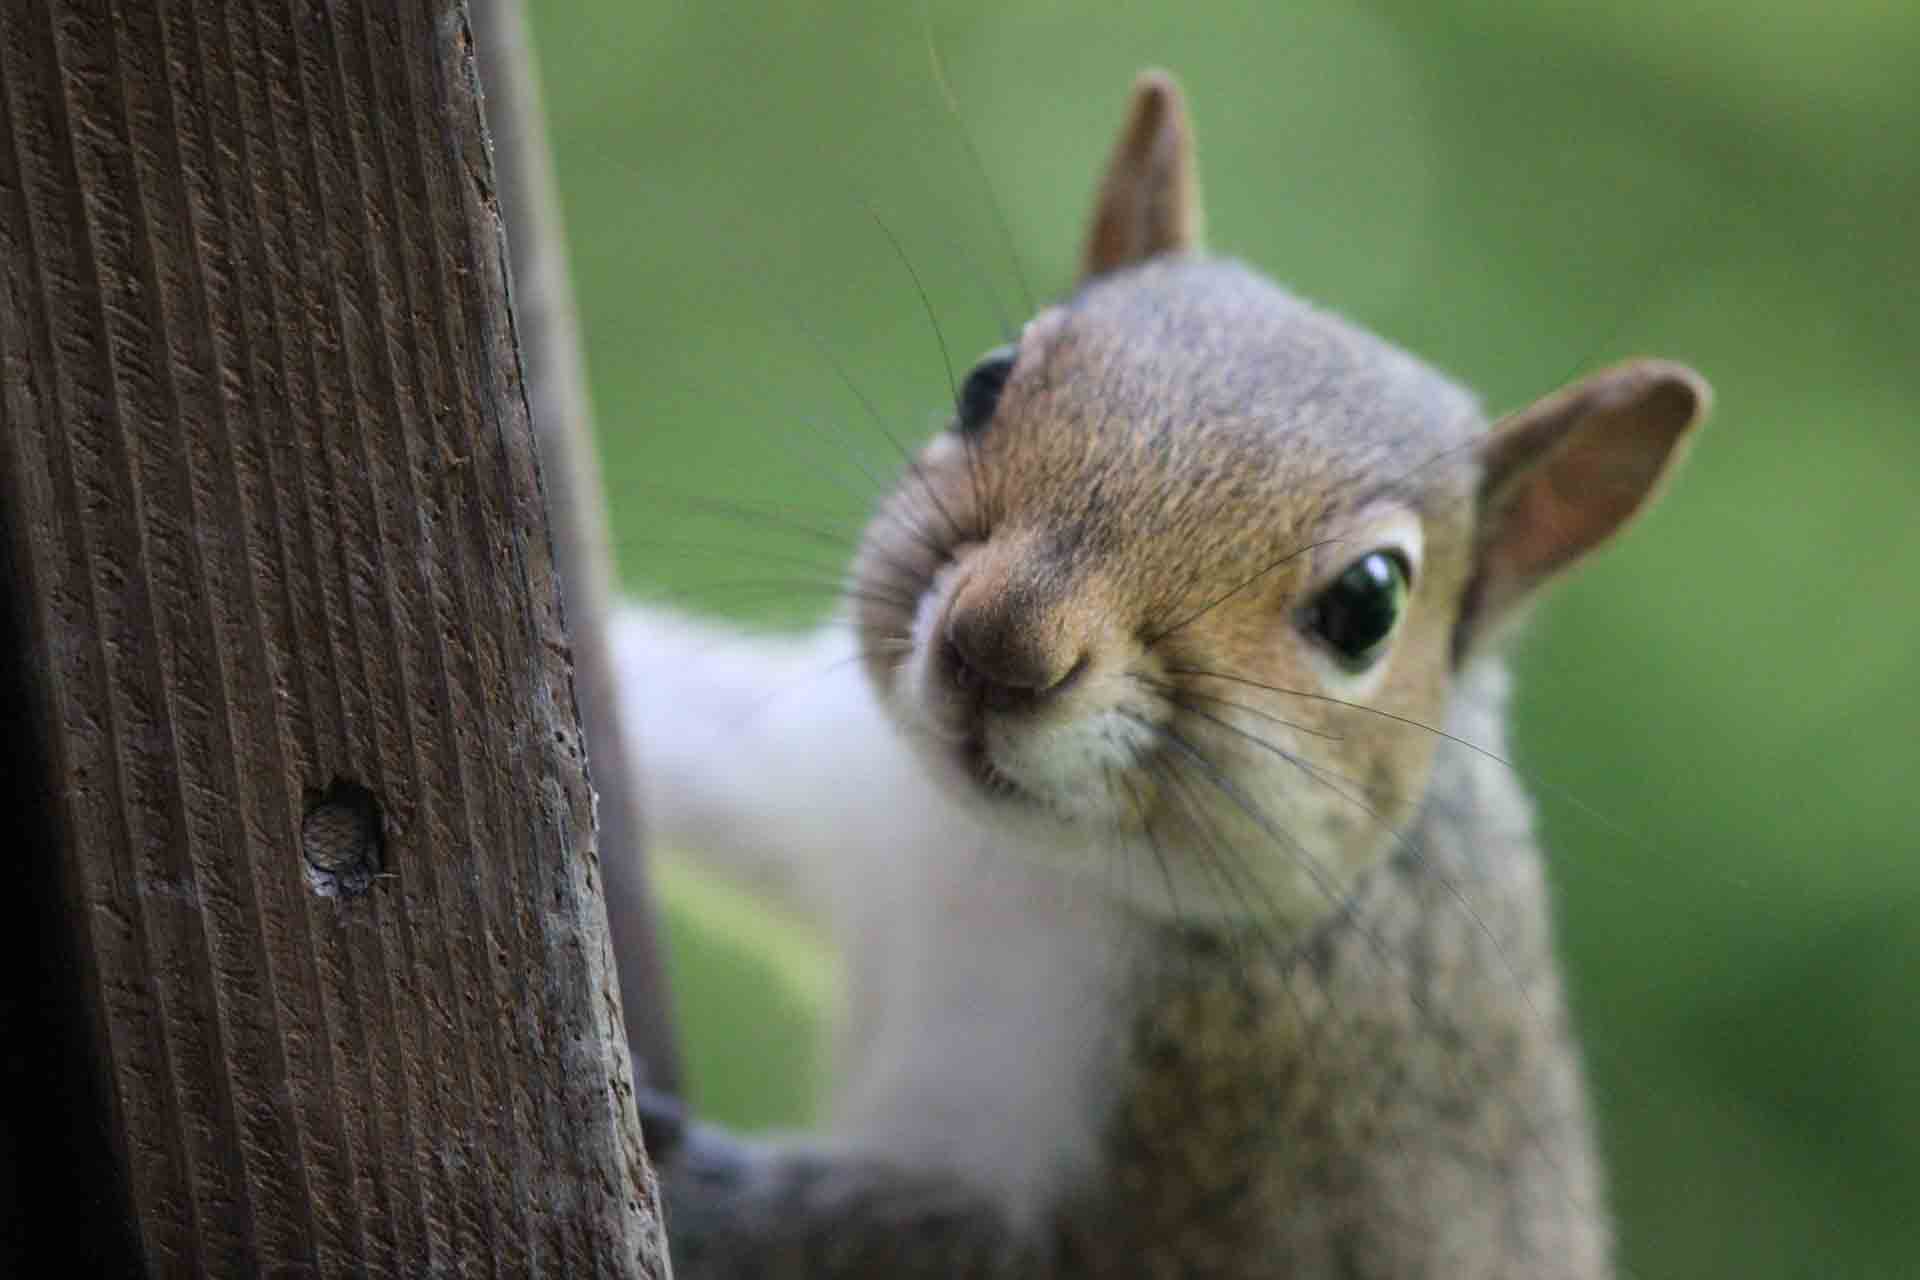 https://www.yourdailyvegan.com/wp-content/uploads/2013/05/close-up-squirrel.jpg